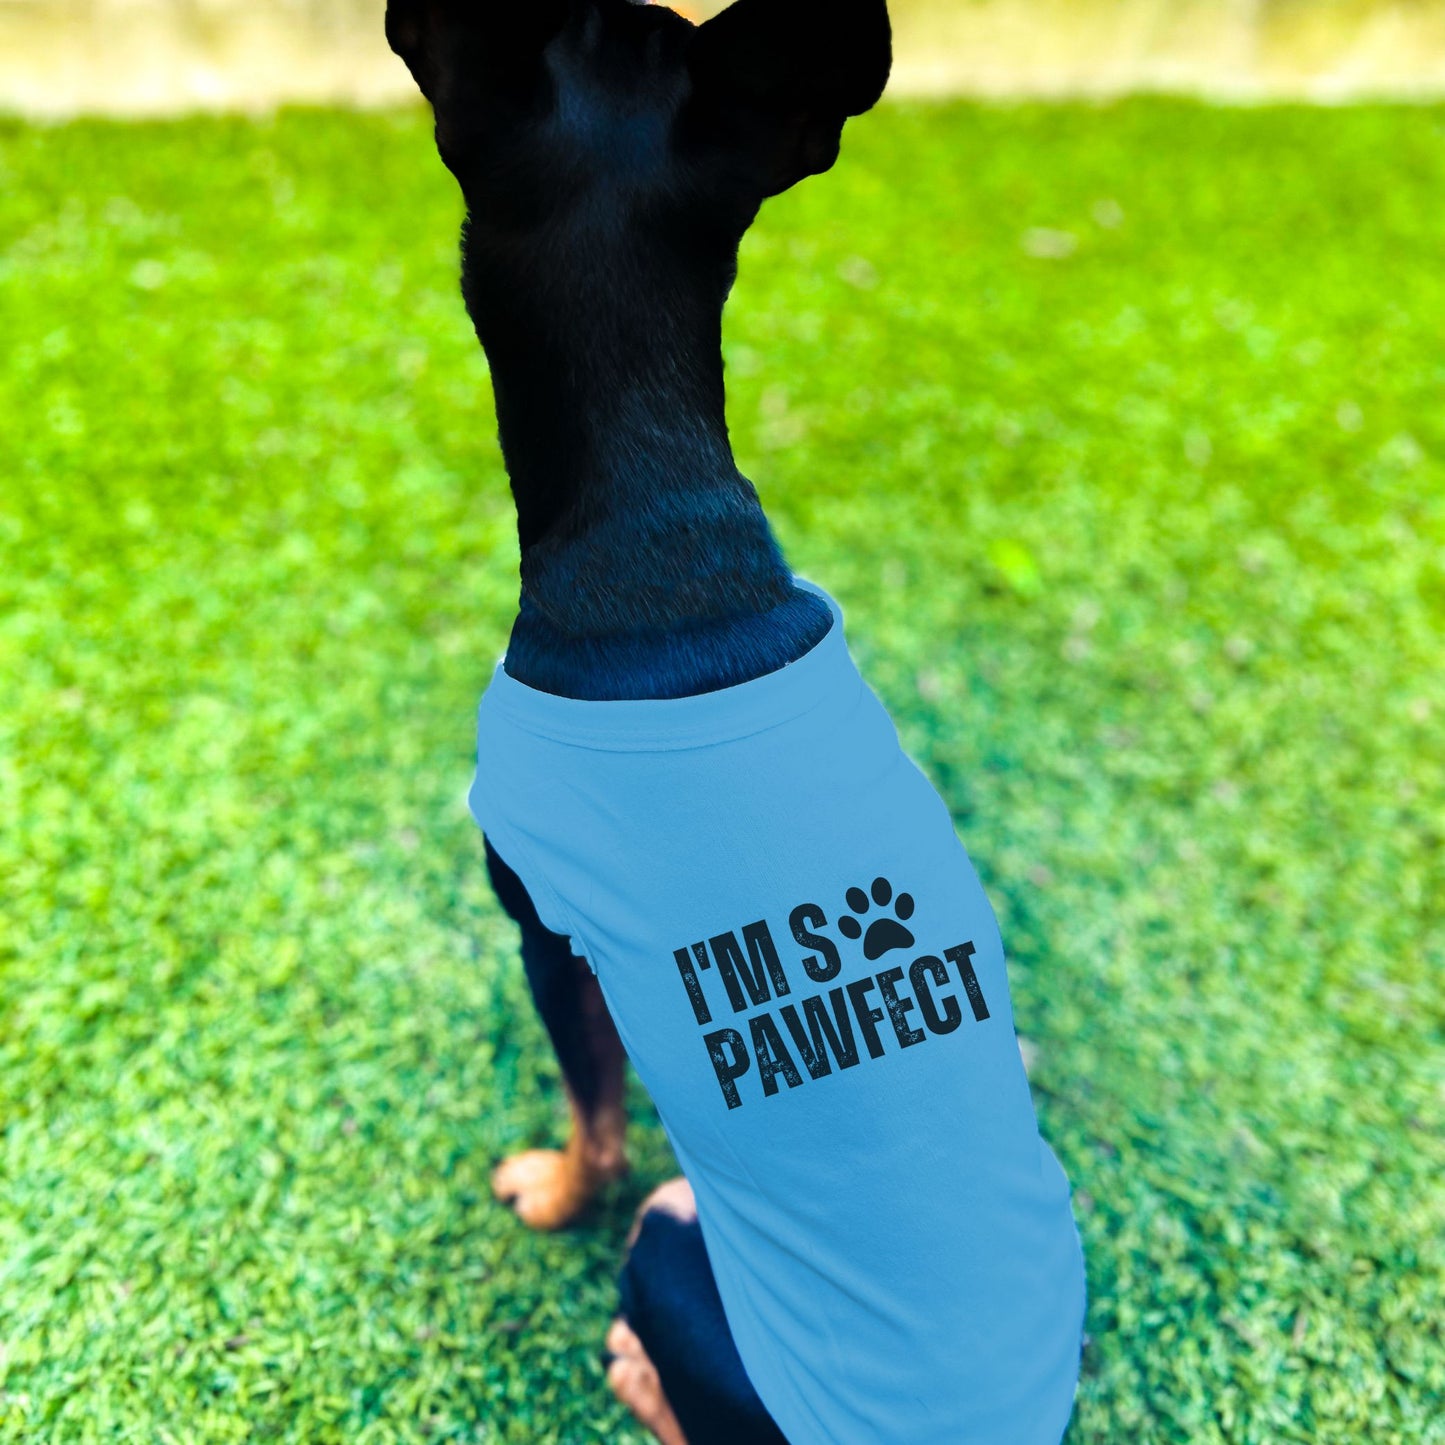 "I'm SO Pawfect" Dog Shirt